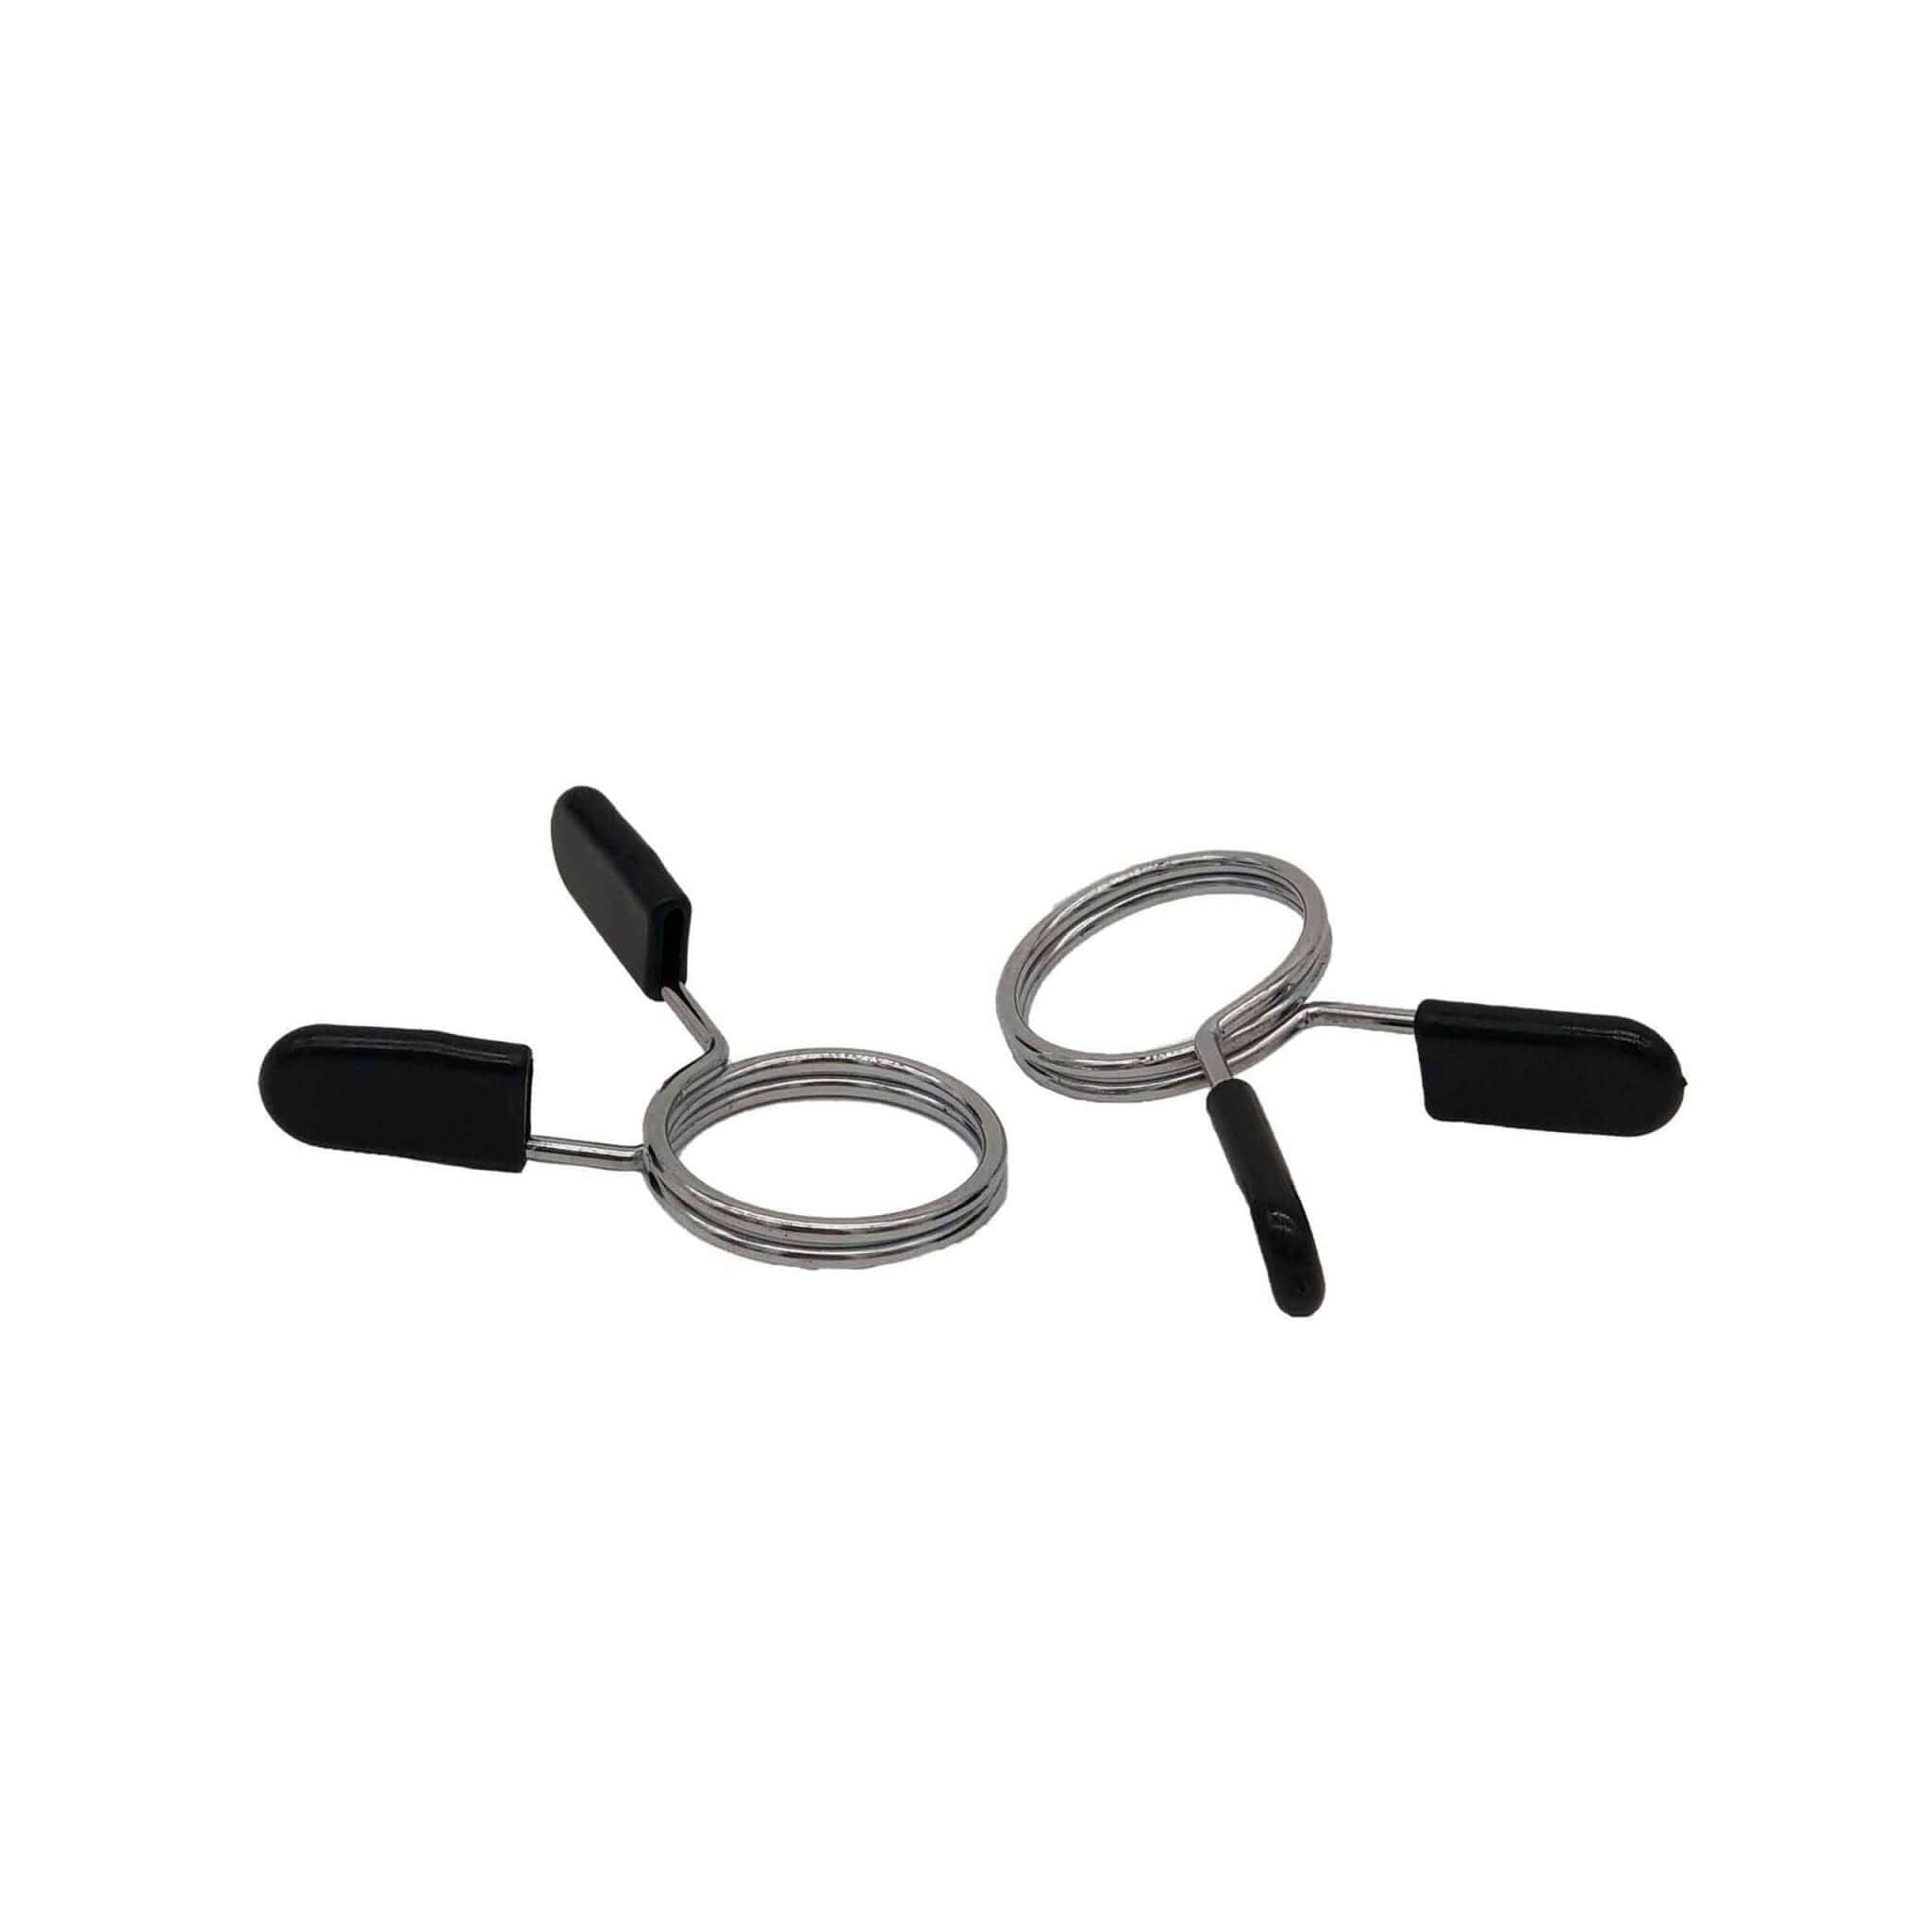 KEFL 2″ Olympic Barbell Spring Collar Set with Black Handle - KEFLUK